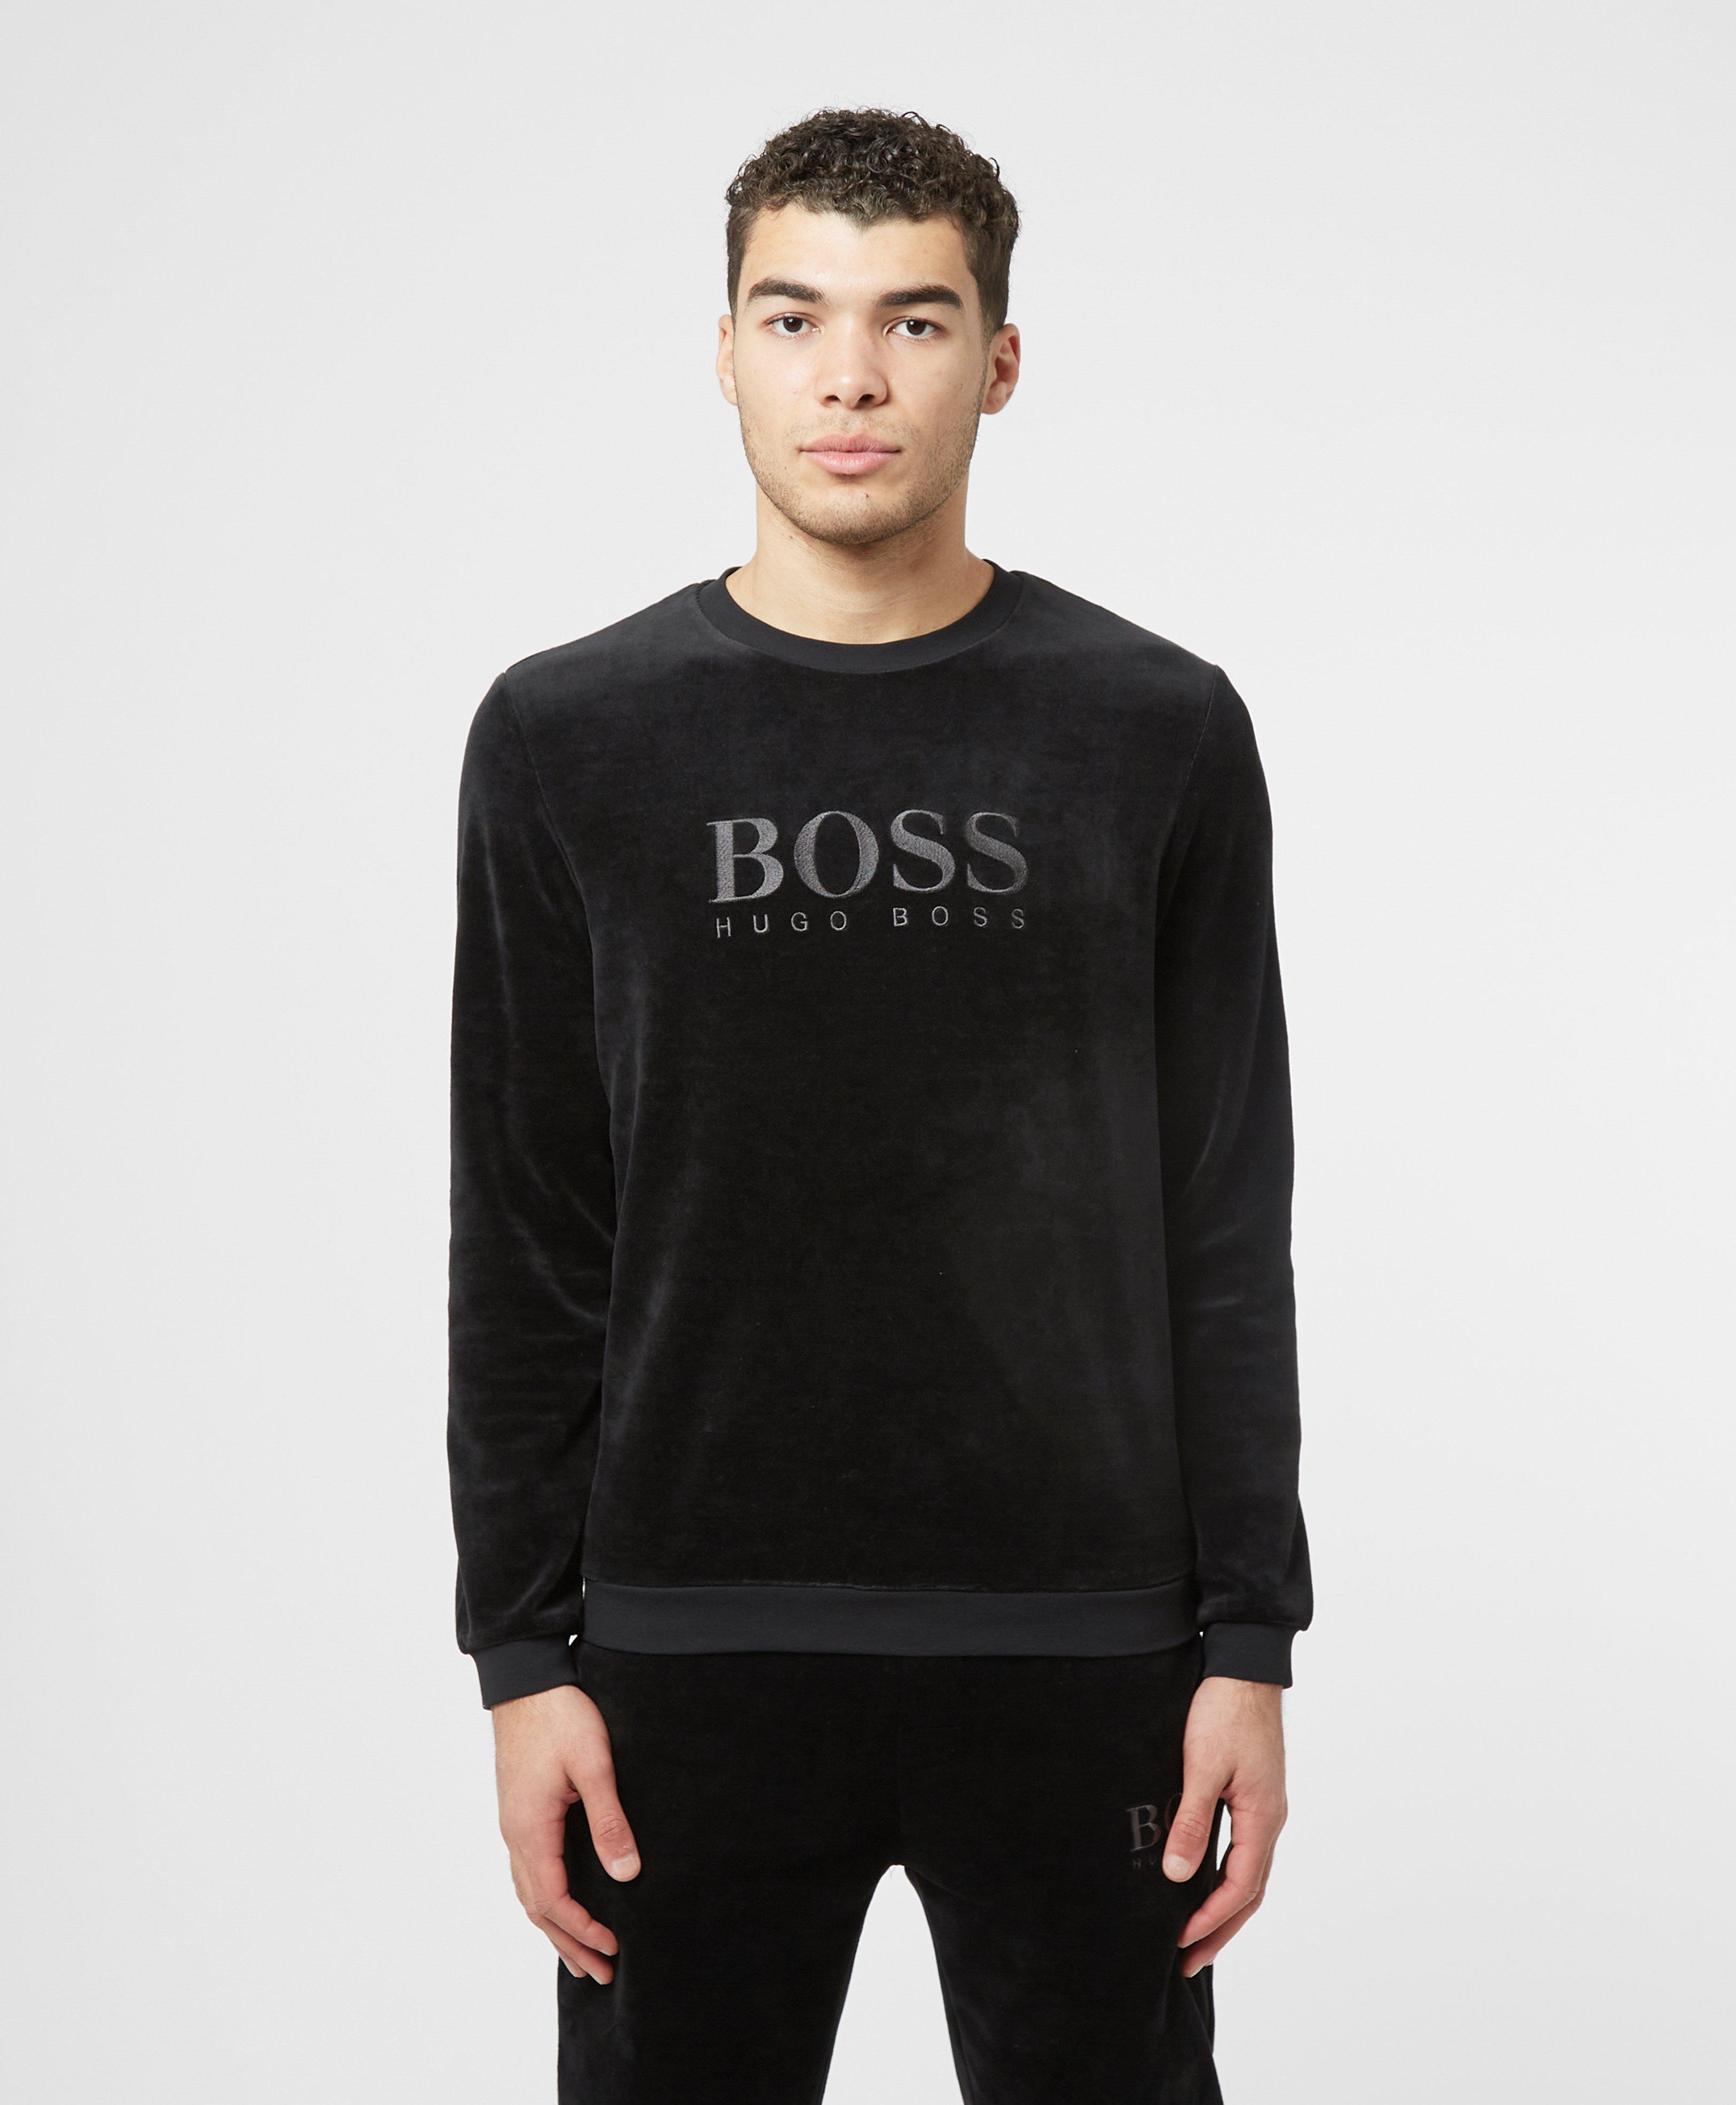 BOSS by HUGO BOSS Velour Crew Sweatshirt in Black for Men | Lyst